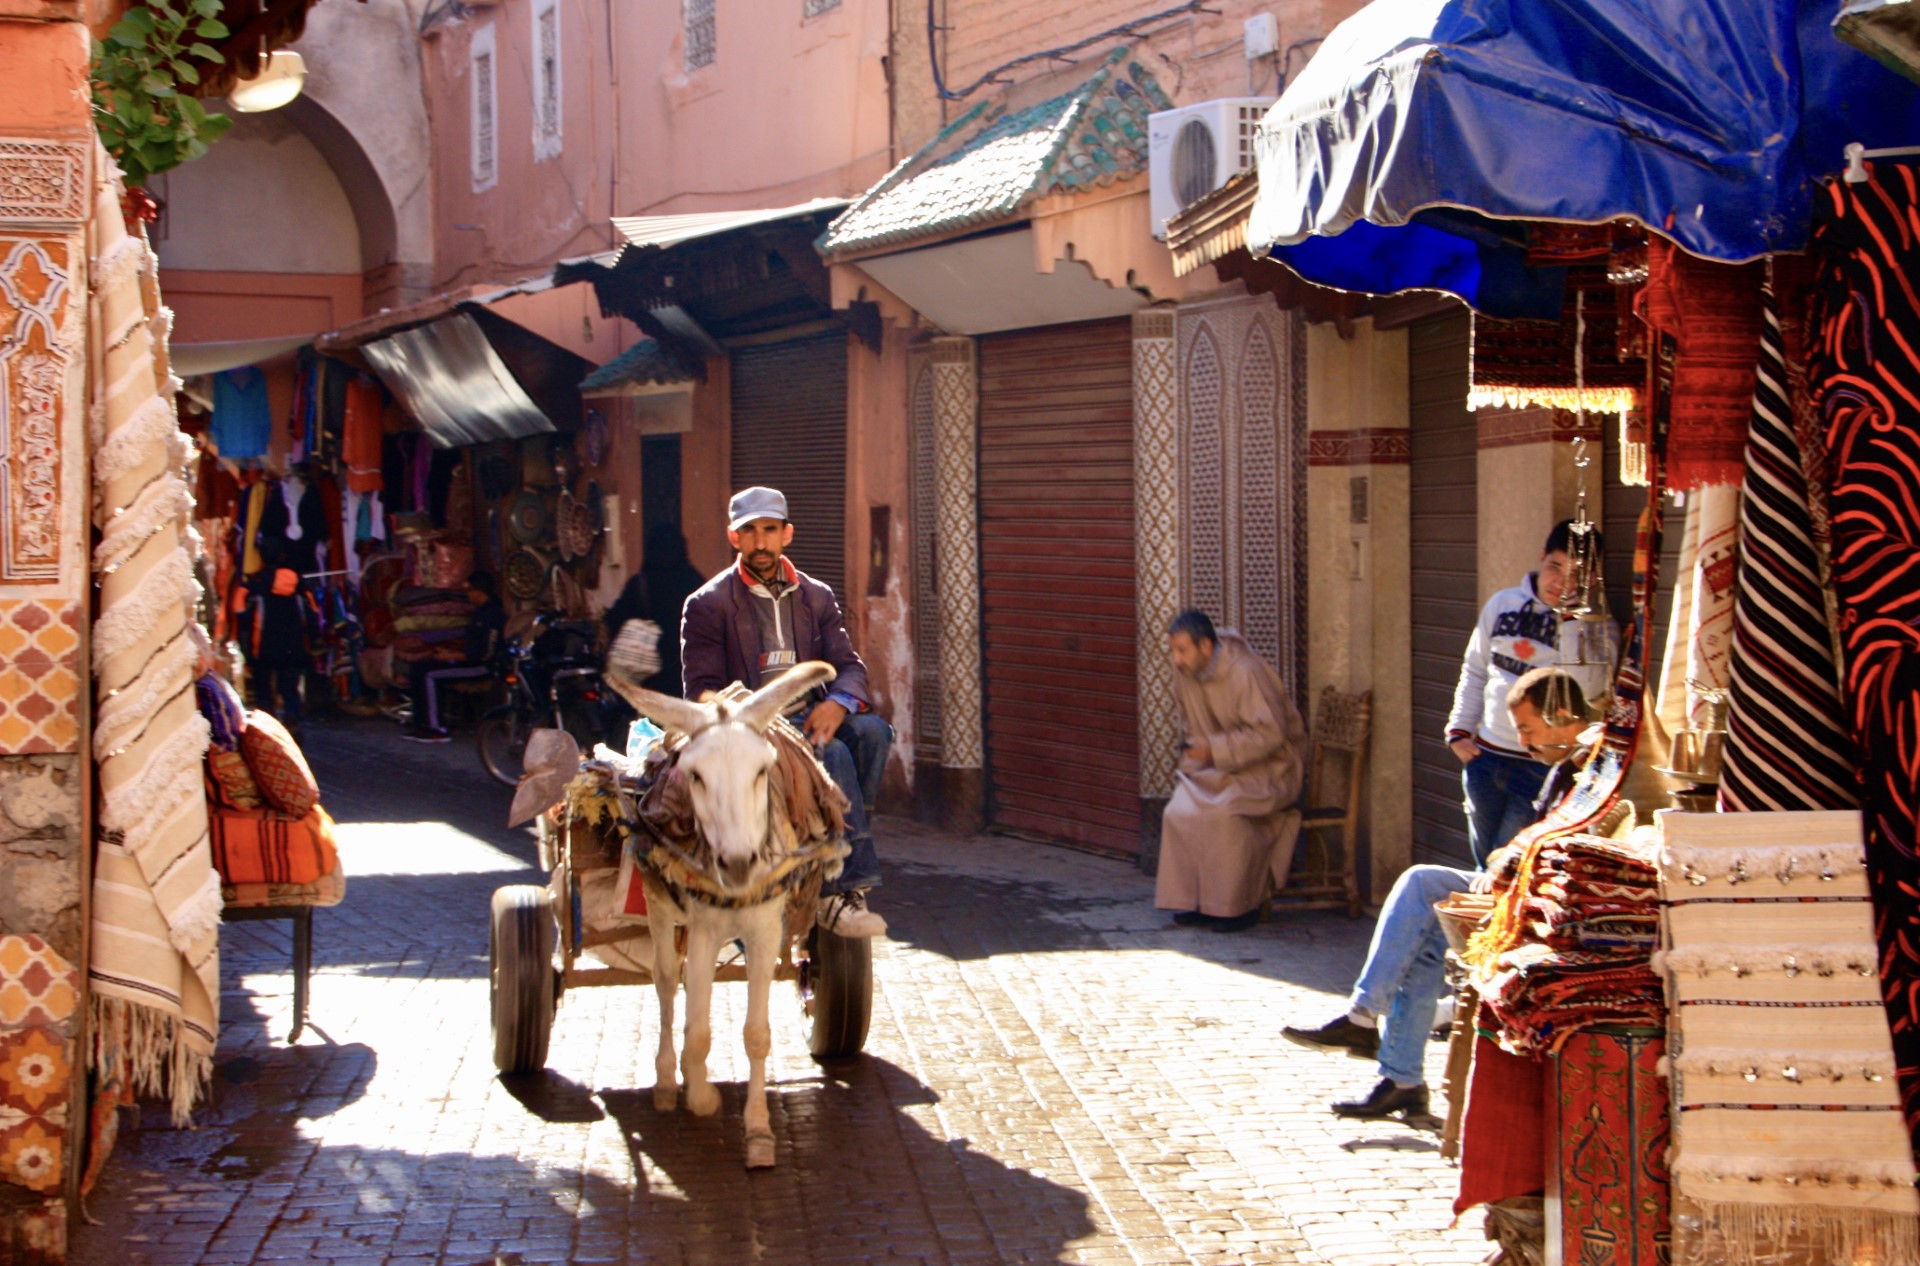 Eselkjerre, Marrakesh